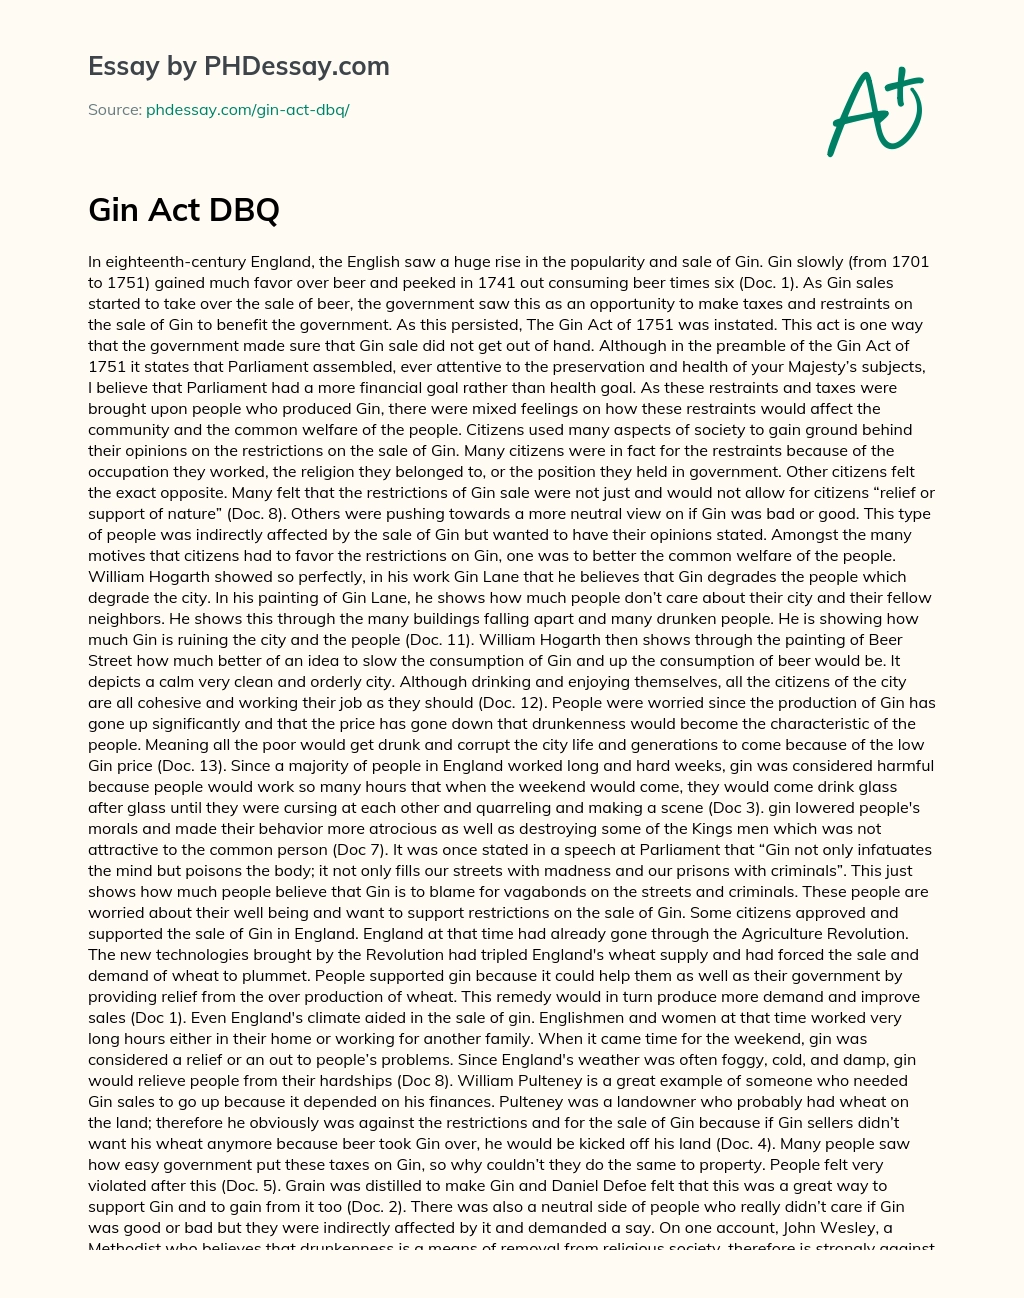 Gin Act DBQ essay